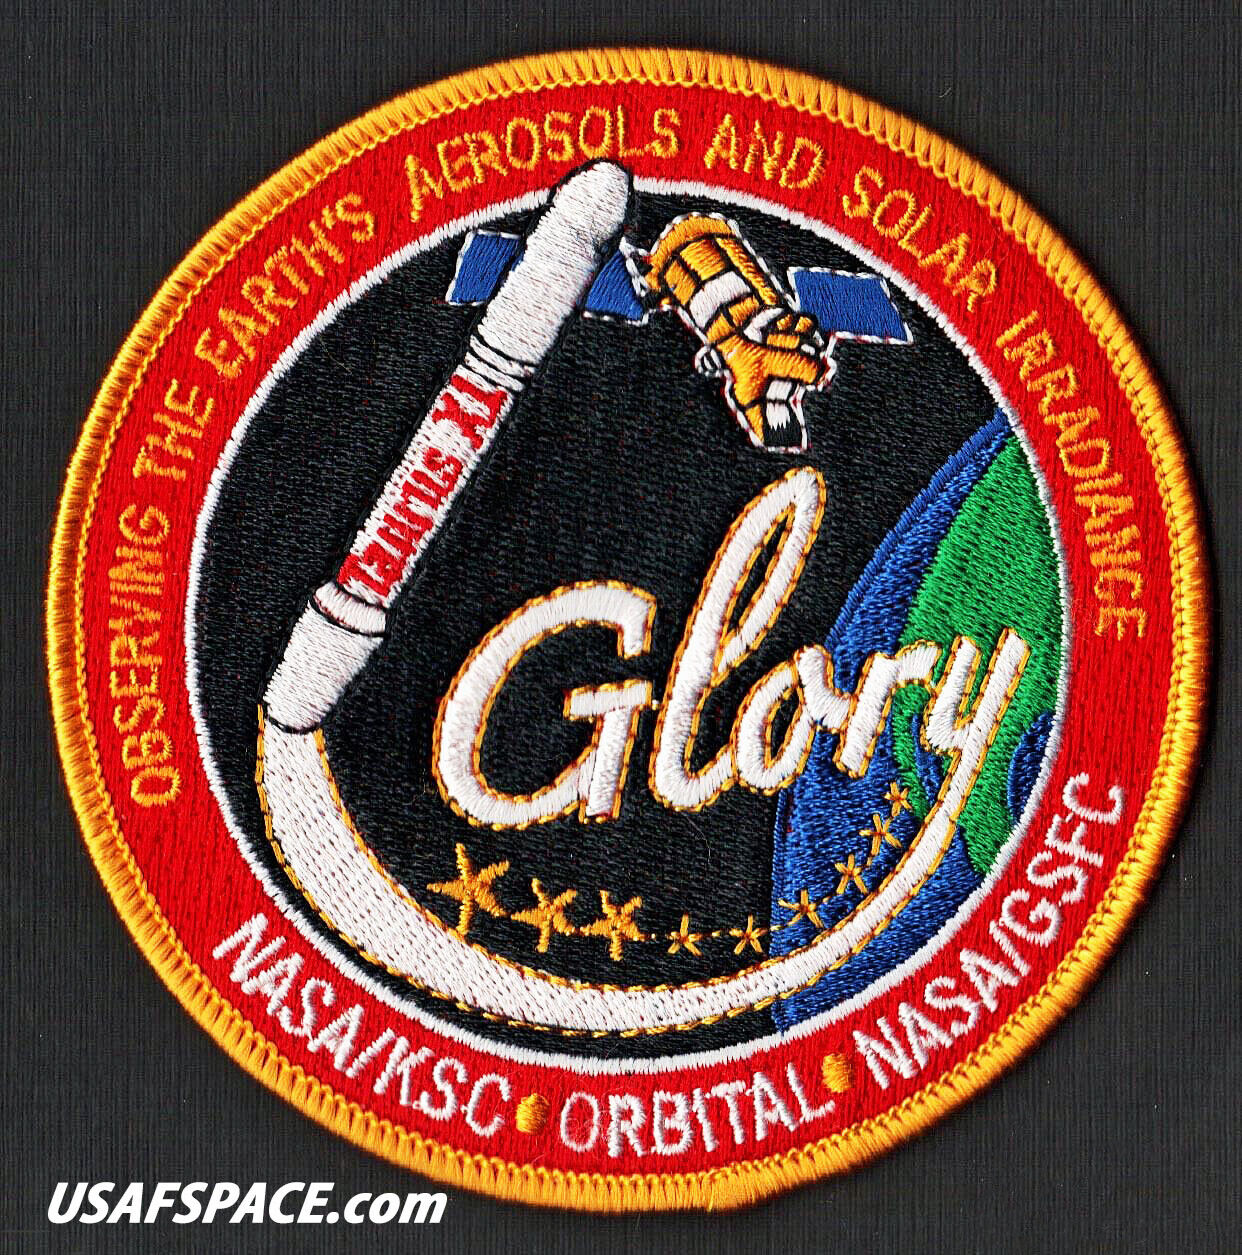 GLORY - TAURUS XL Launch NASA KSC ORBITAL GSFC SATELLITE Mission SPACE PATCH 